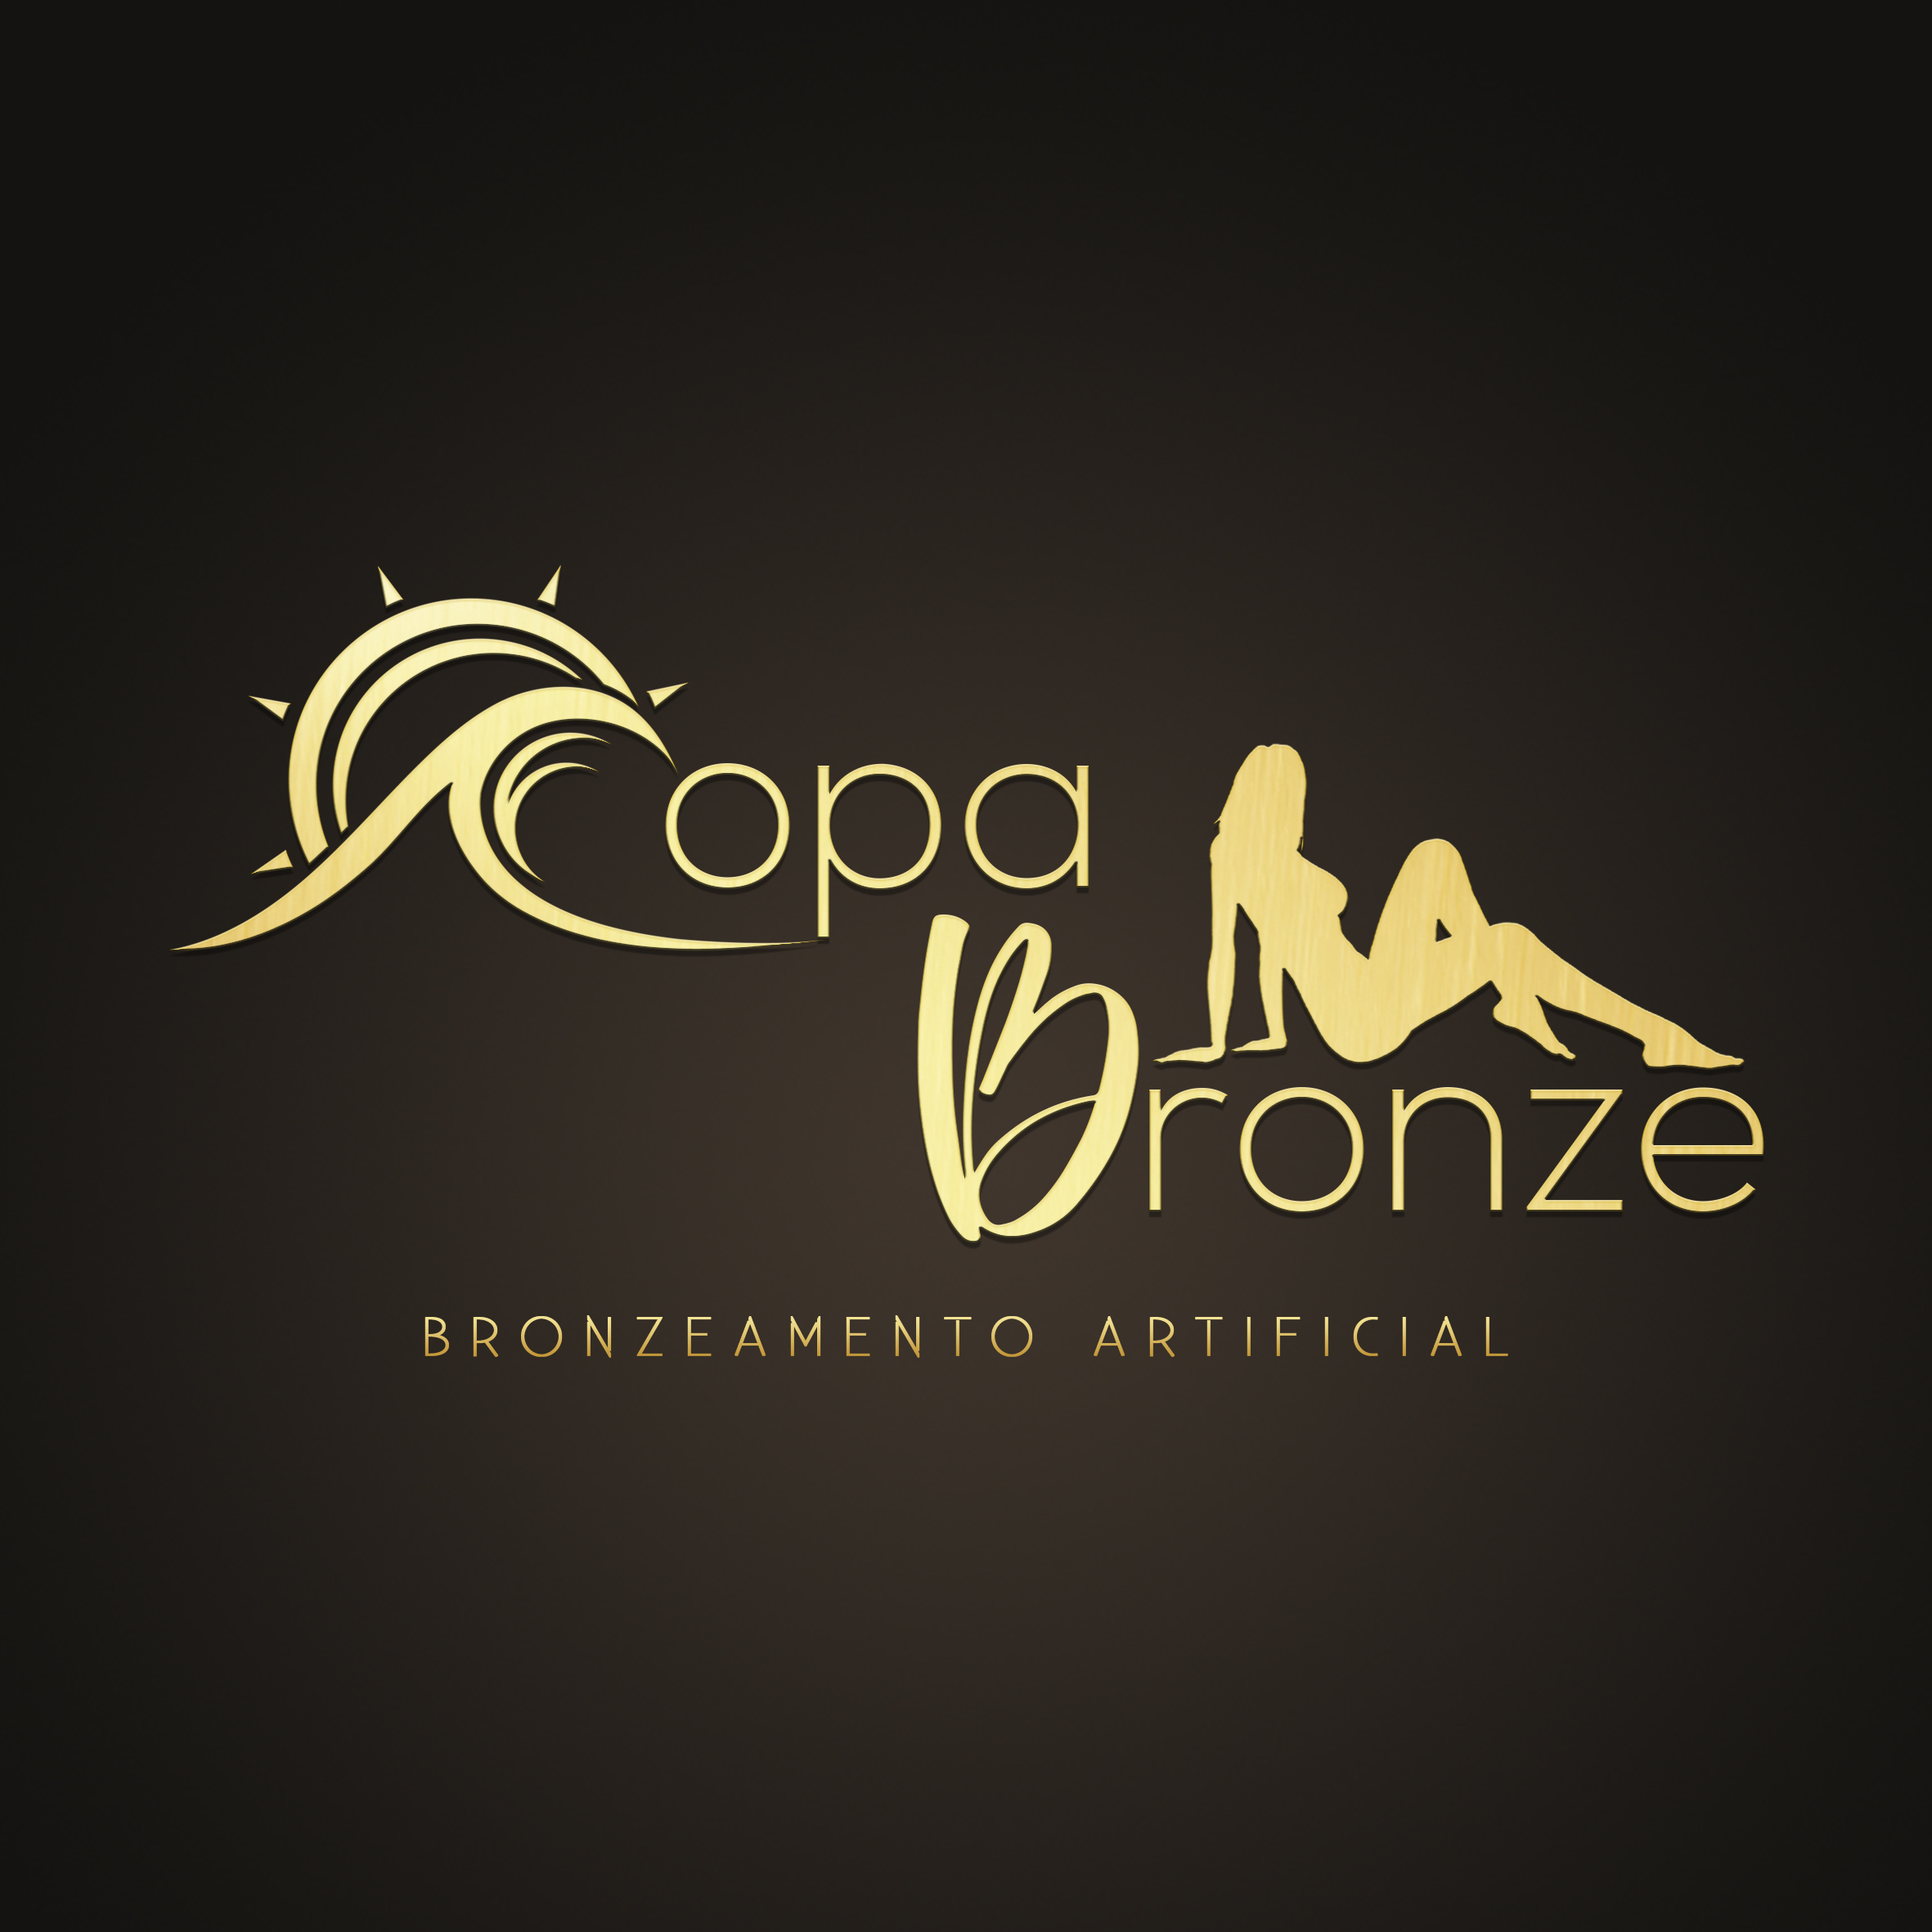 Copa Bronze : Brand Short Description Type Here.